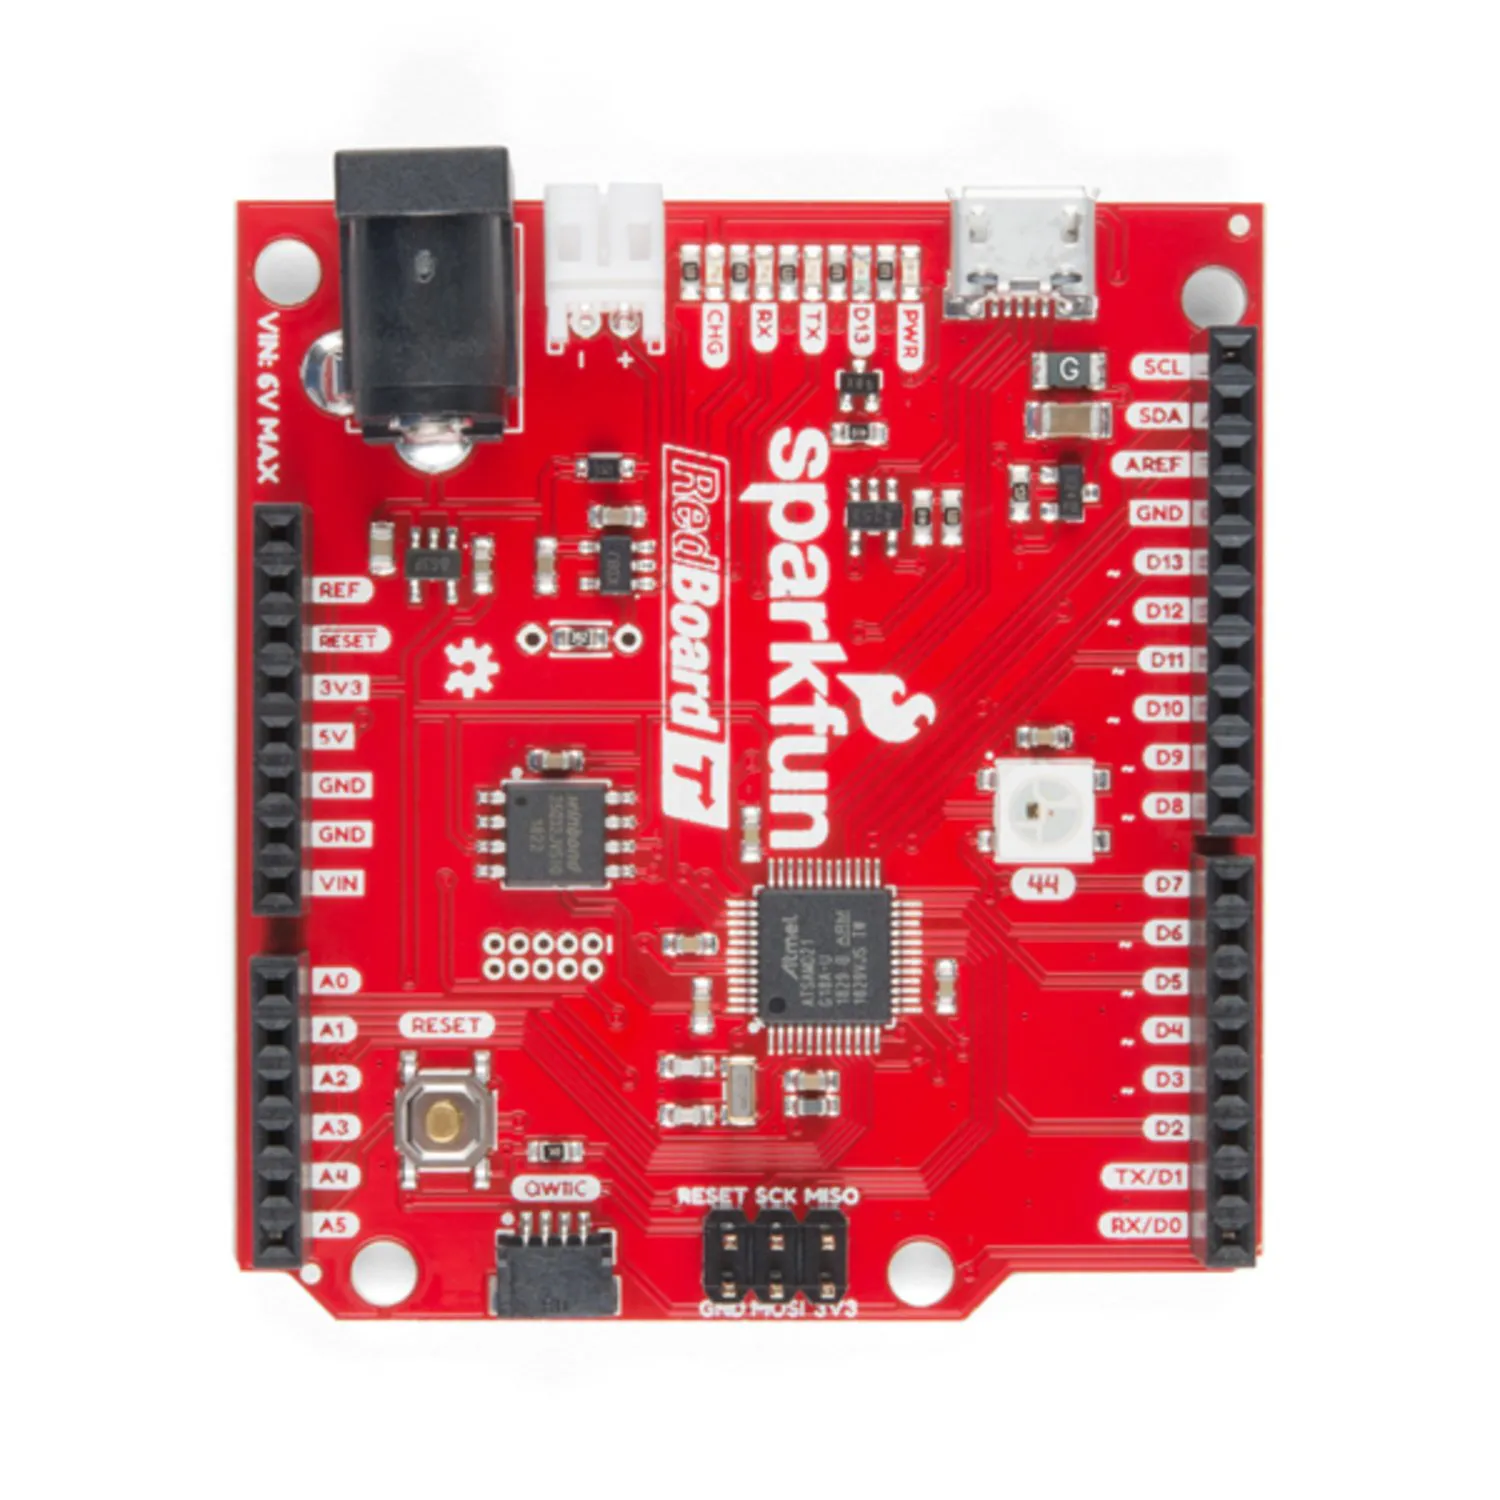 Photo of SparkFun RedBoard Turbo - SAMD21 Development Board